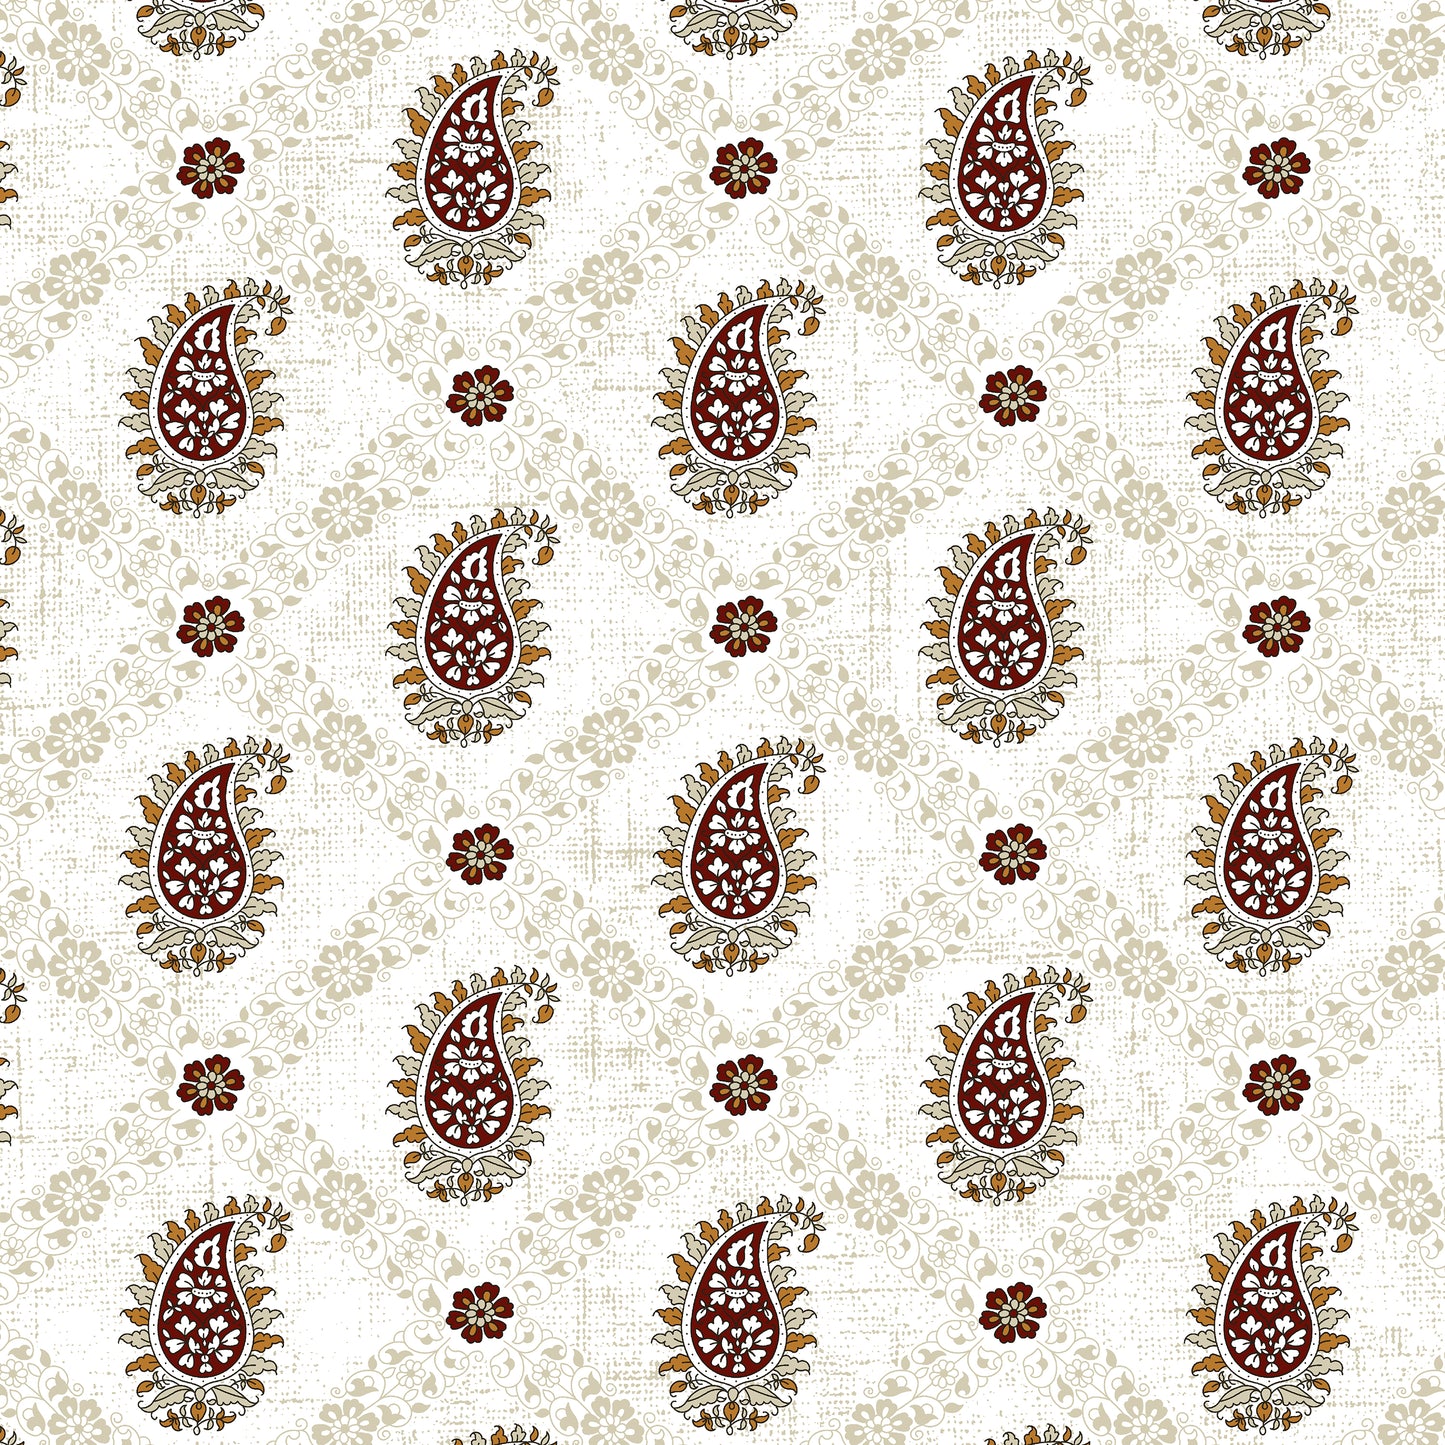 Digital textile pattern design wallpaper for wall